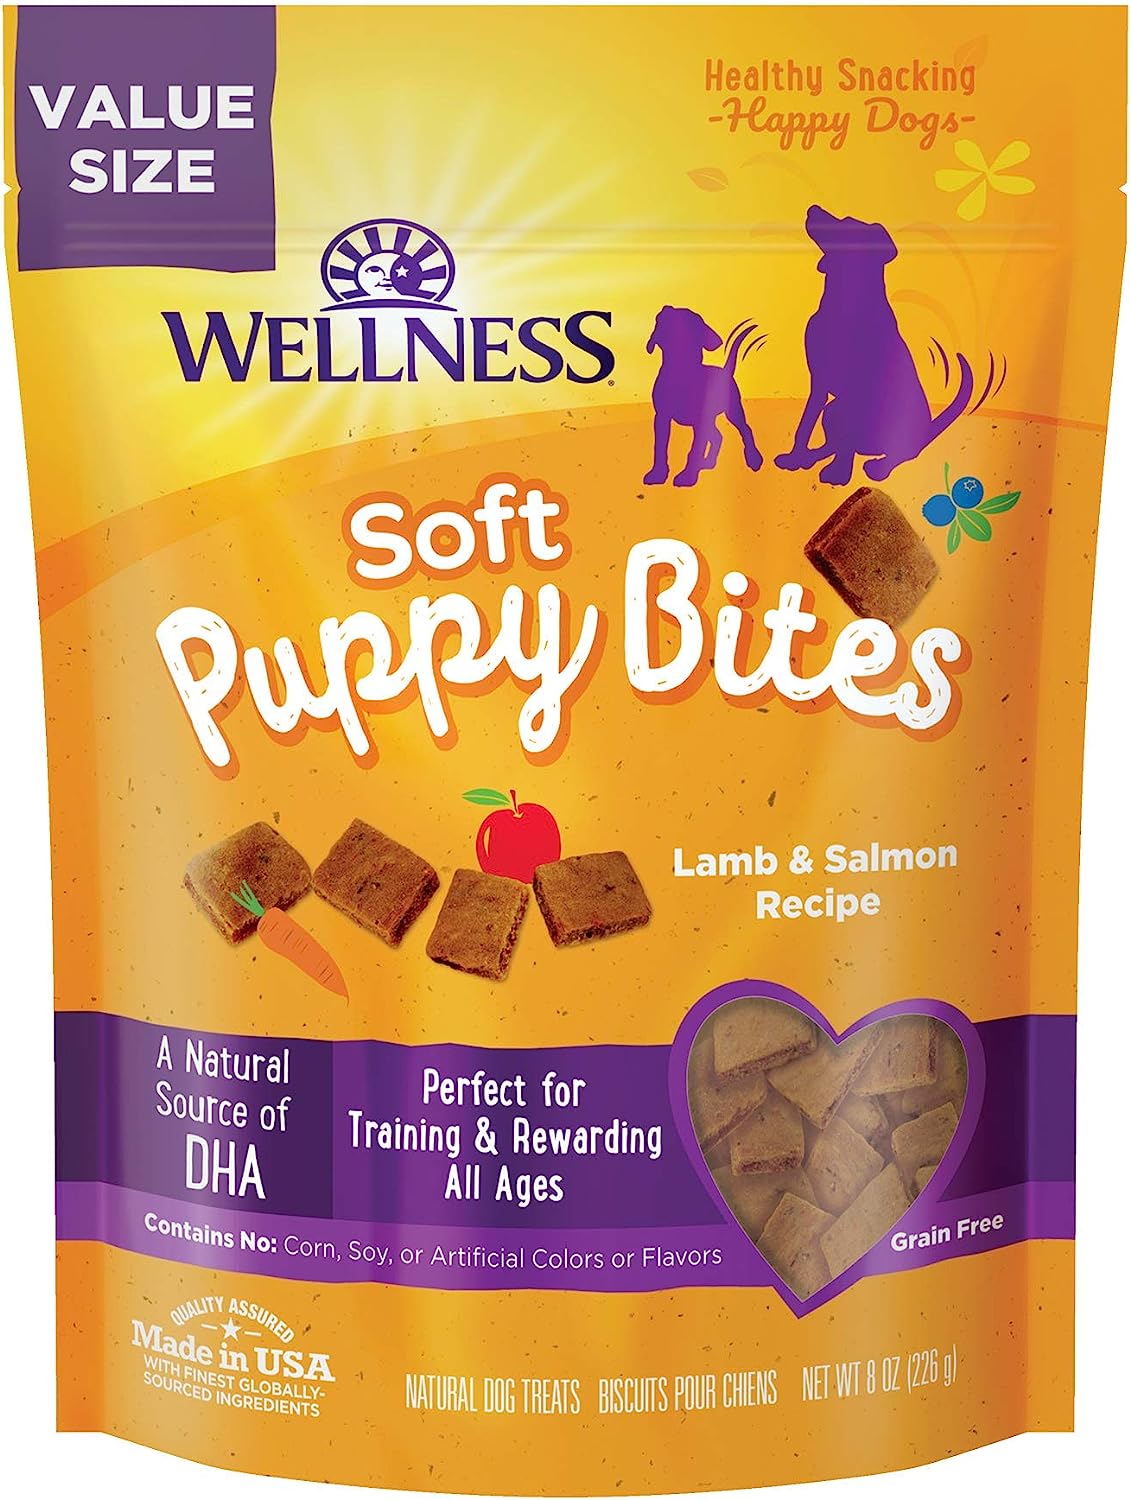 4. Wellness Soft Puppy Bites Natural Grain-Free Treats